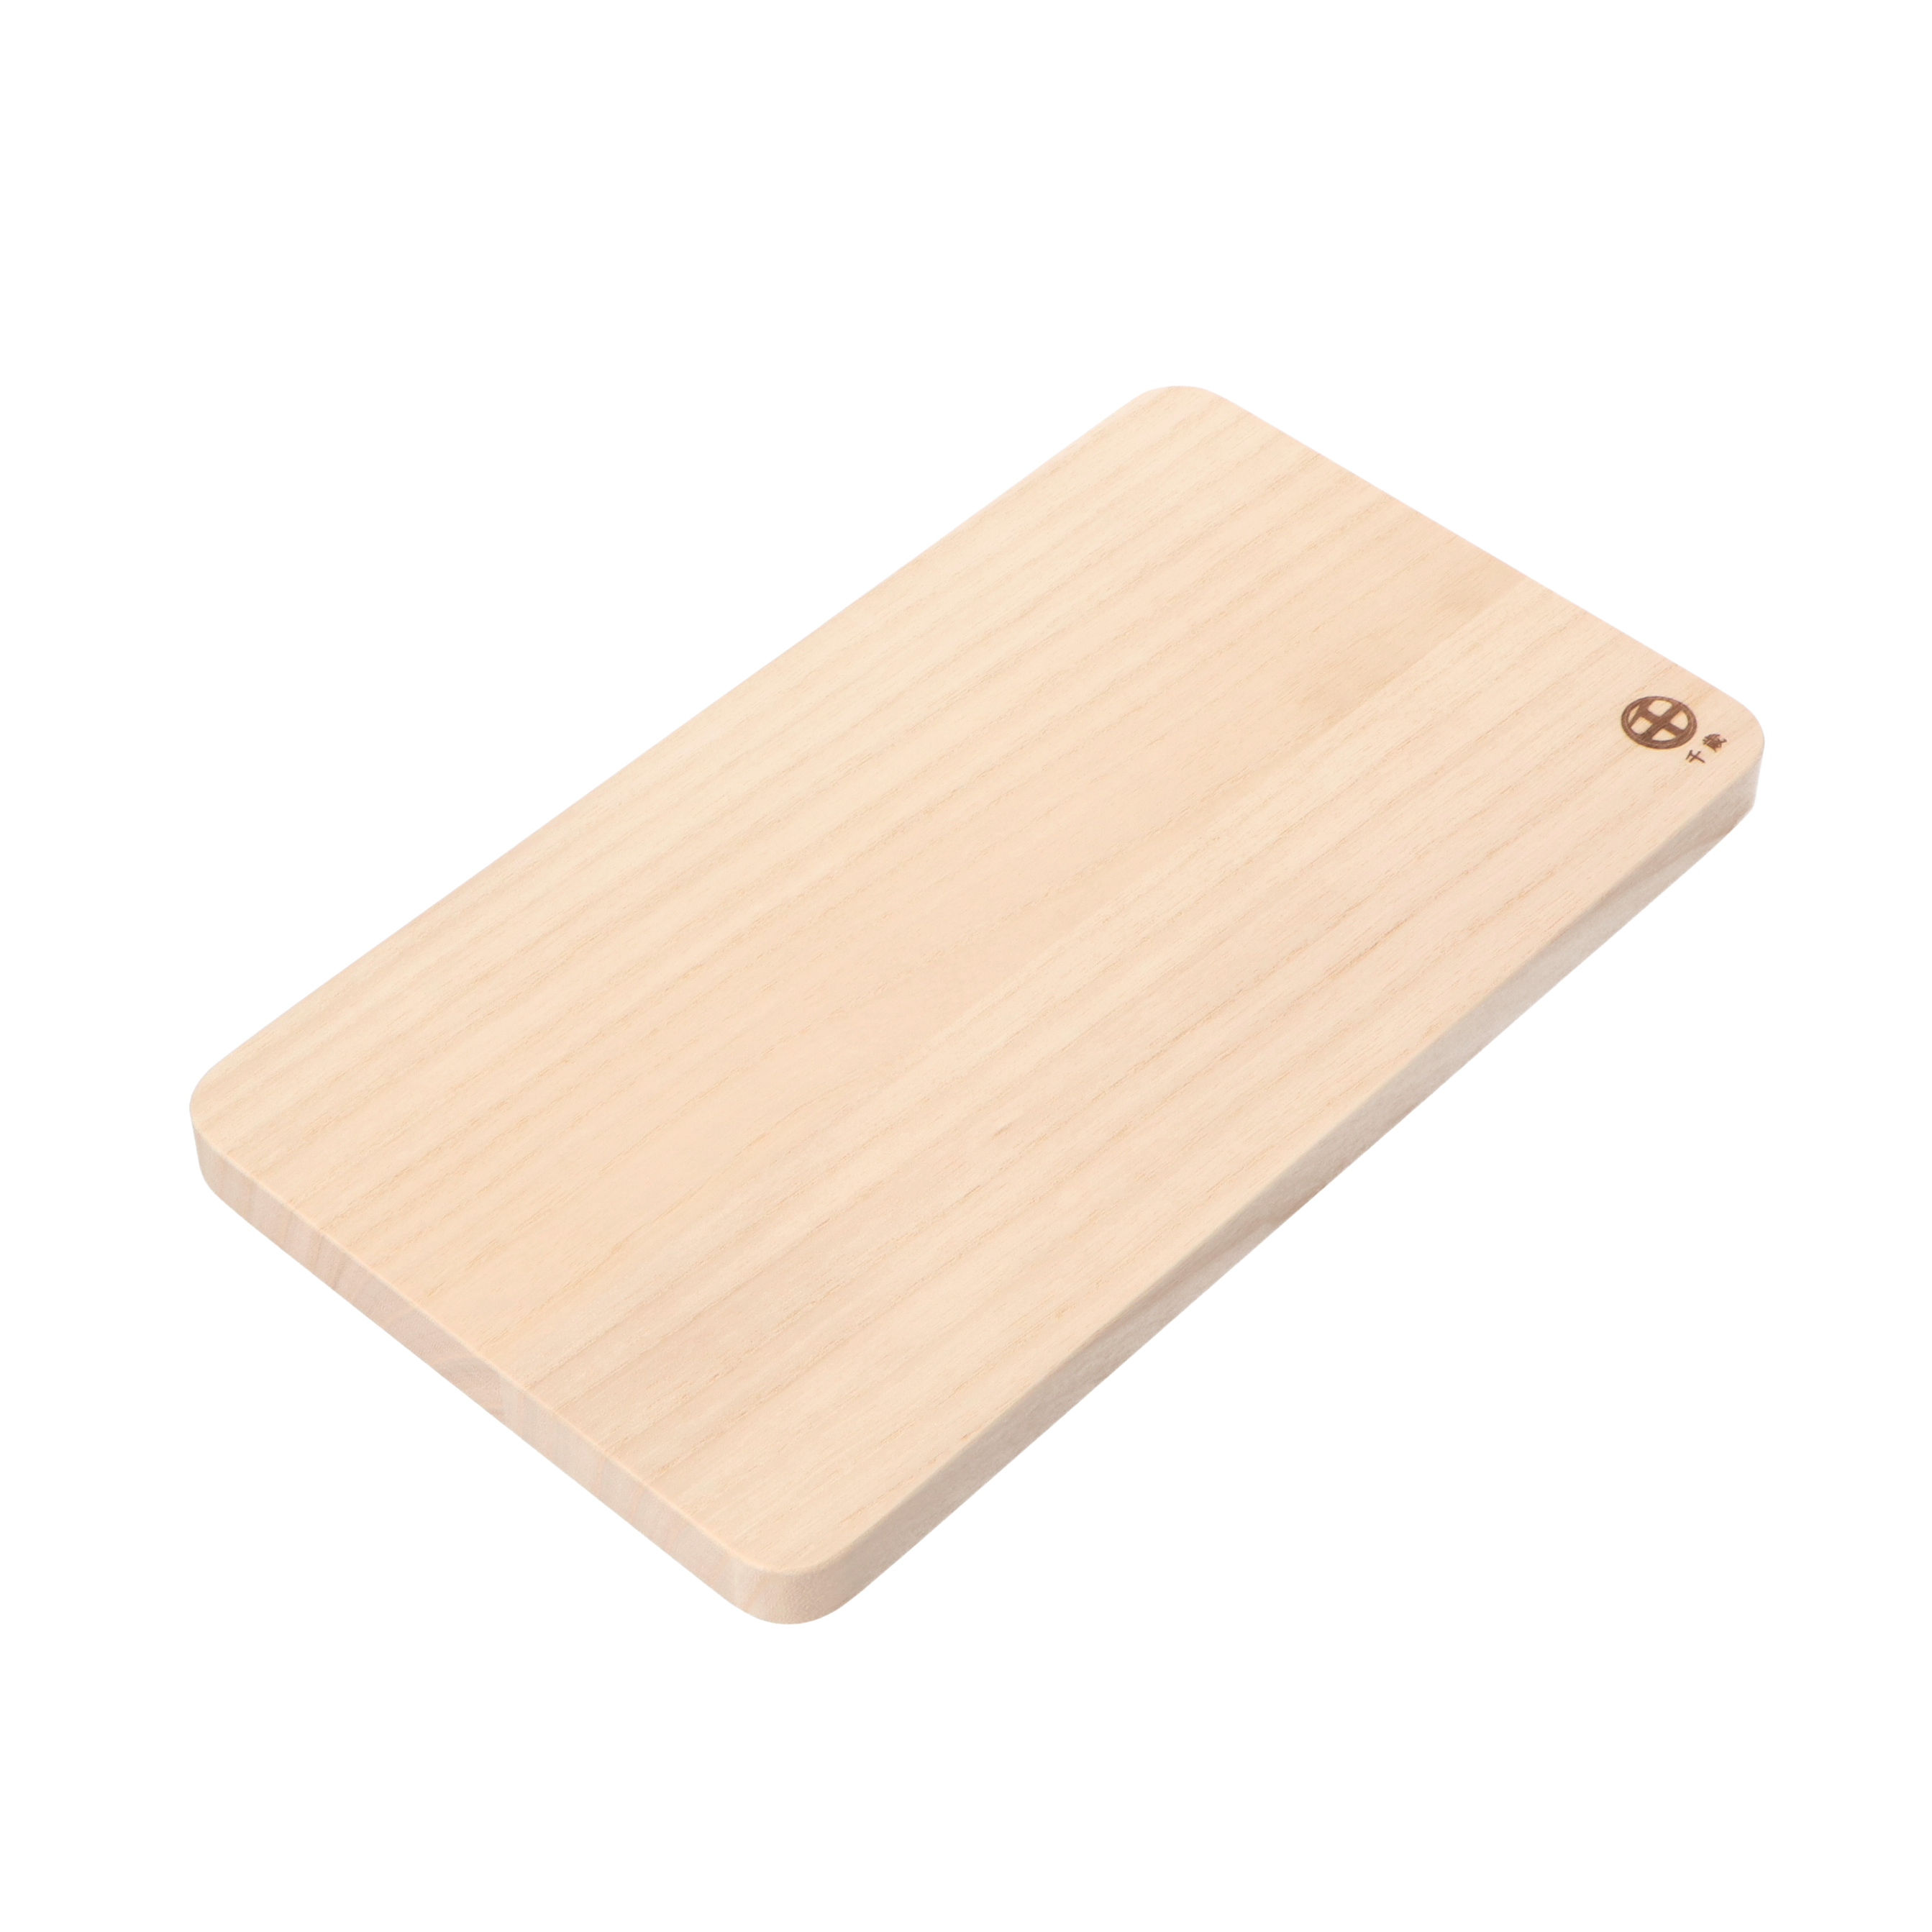 woodpecker まな板 いちょう 木製 日本製 天然木 いちょうの木のまな板 持ち穴 角 (2大) - 4